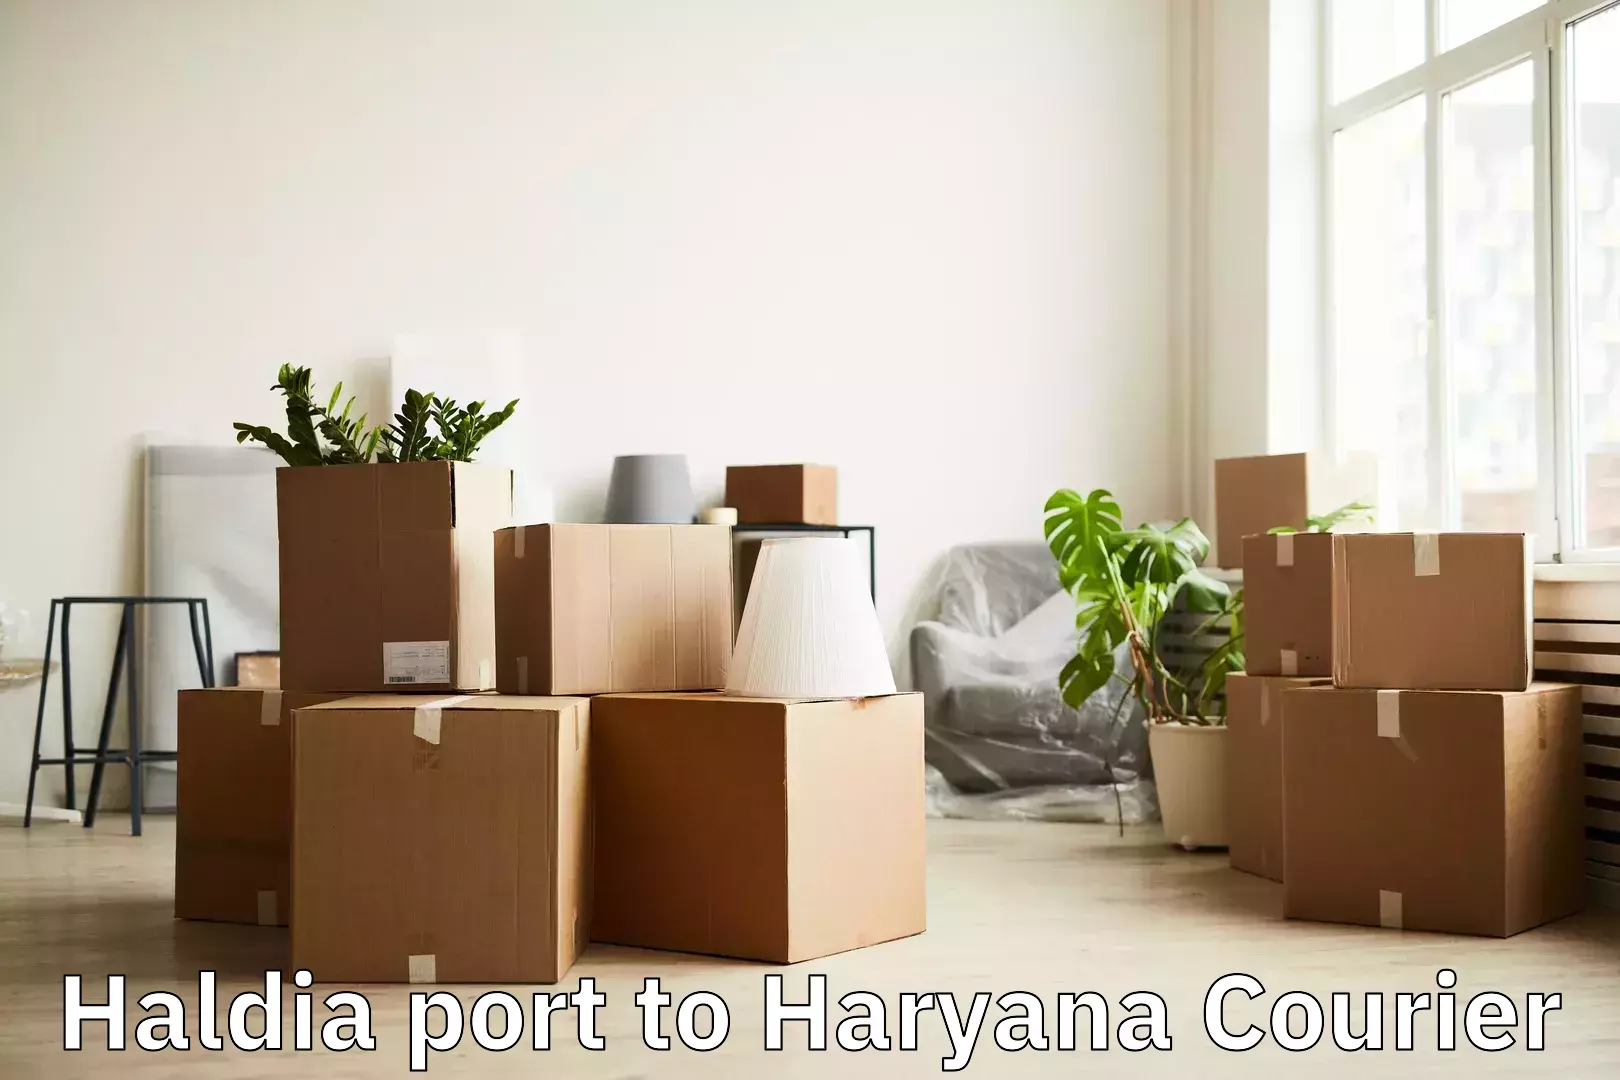 Emergency baggage service Haldia port to Sohna